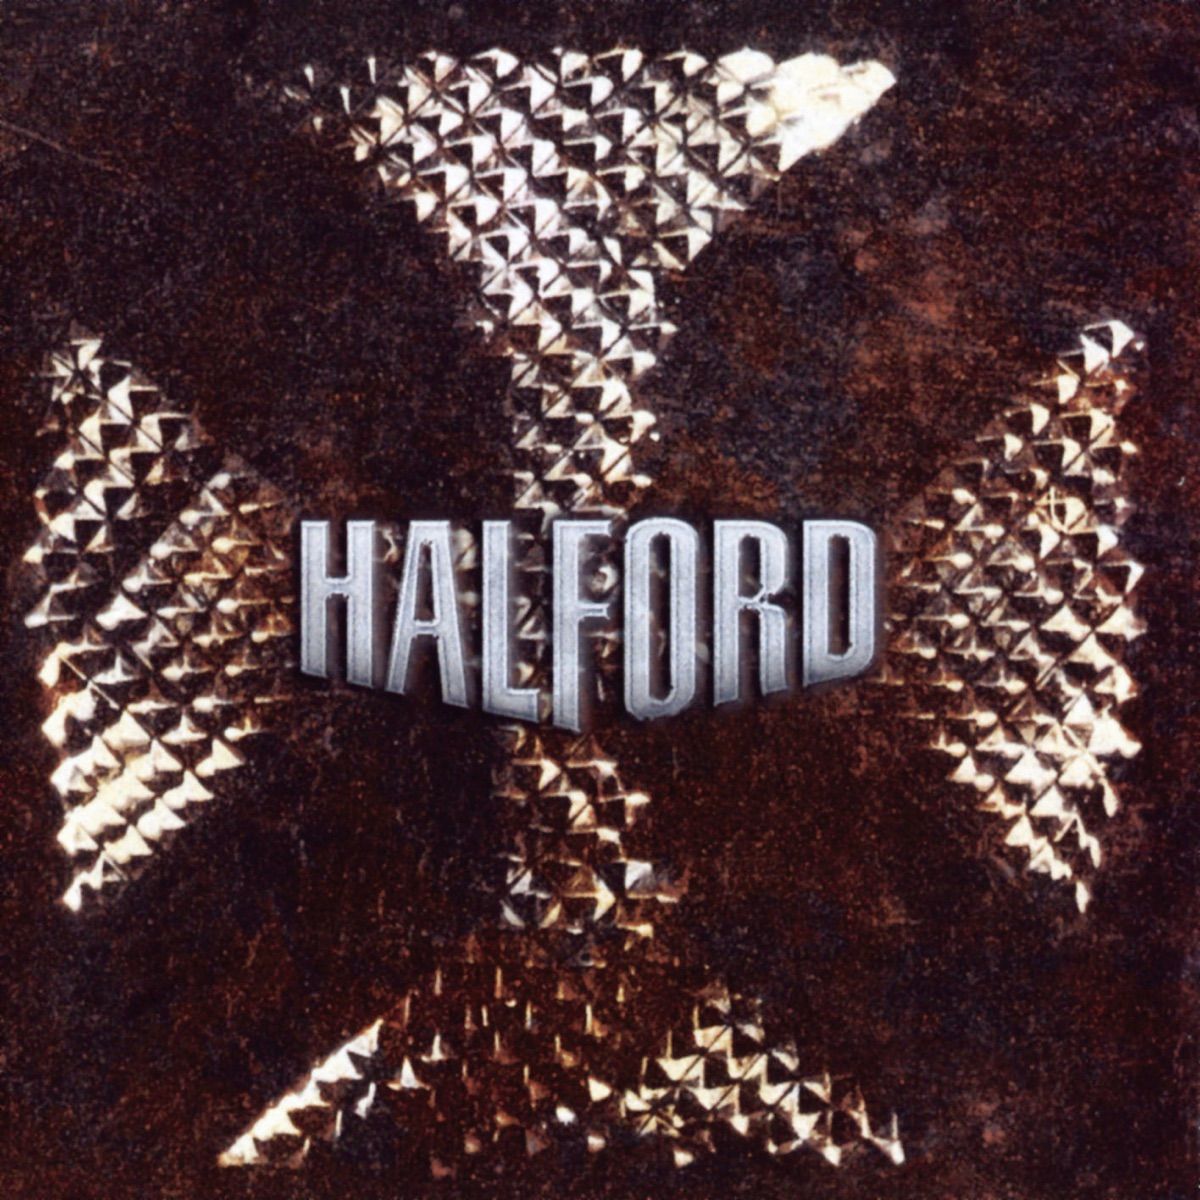 Halford - Made Of Metal